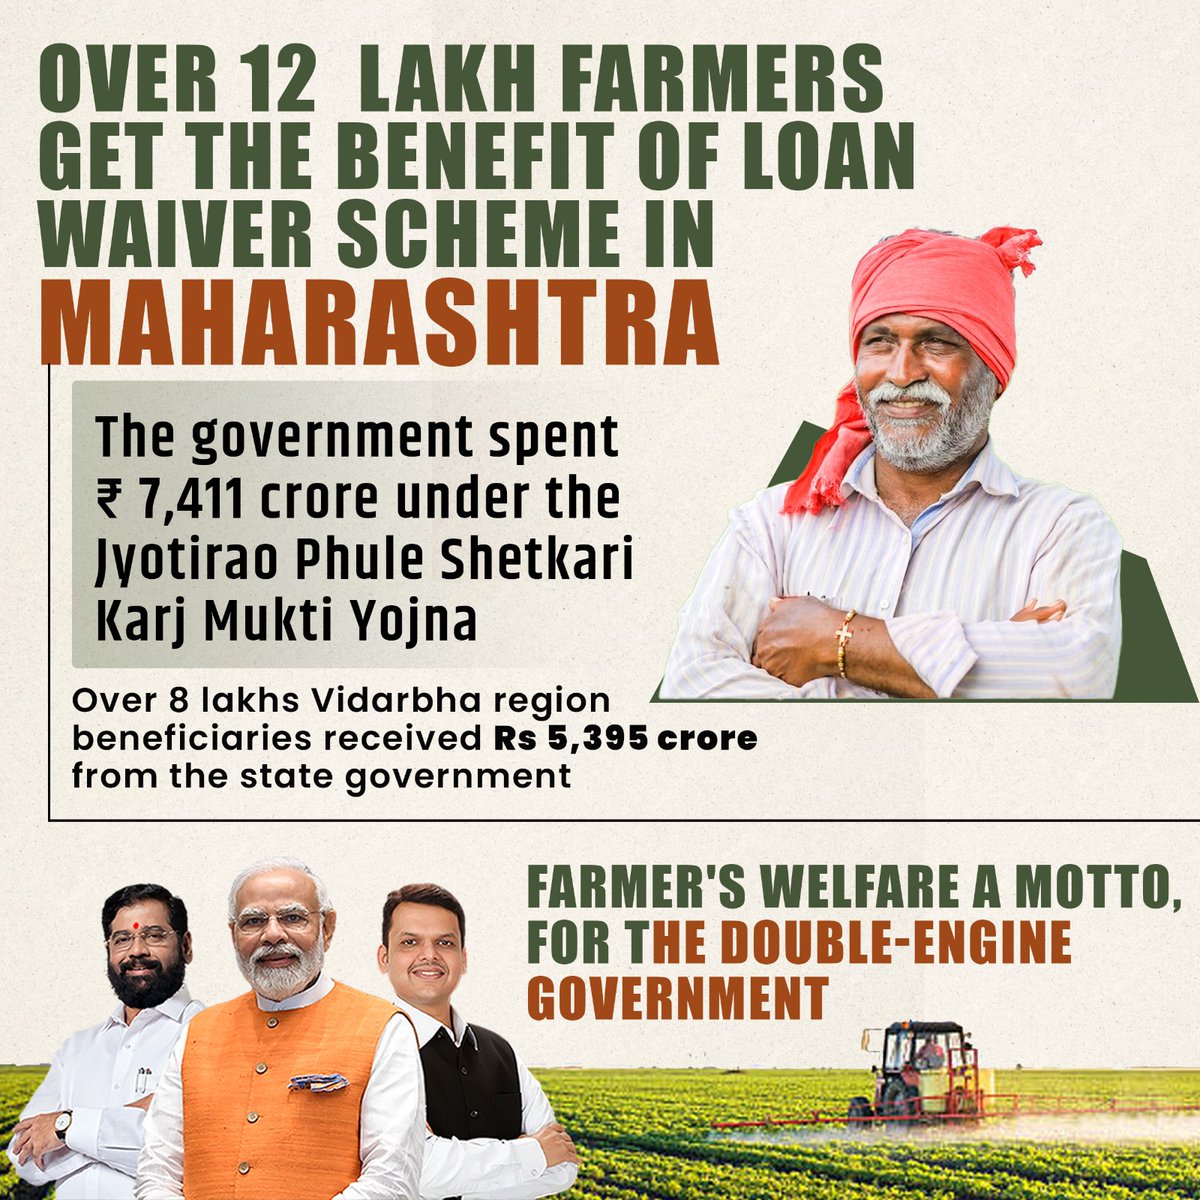 More than 12 lakh farmers benefited under the loan waiver scheme - Maharashtra Mahatma Jyotirao Phule Shetkari Karj Mukti Yojana! And more to go! 👏🚩🔥